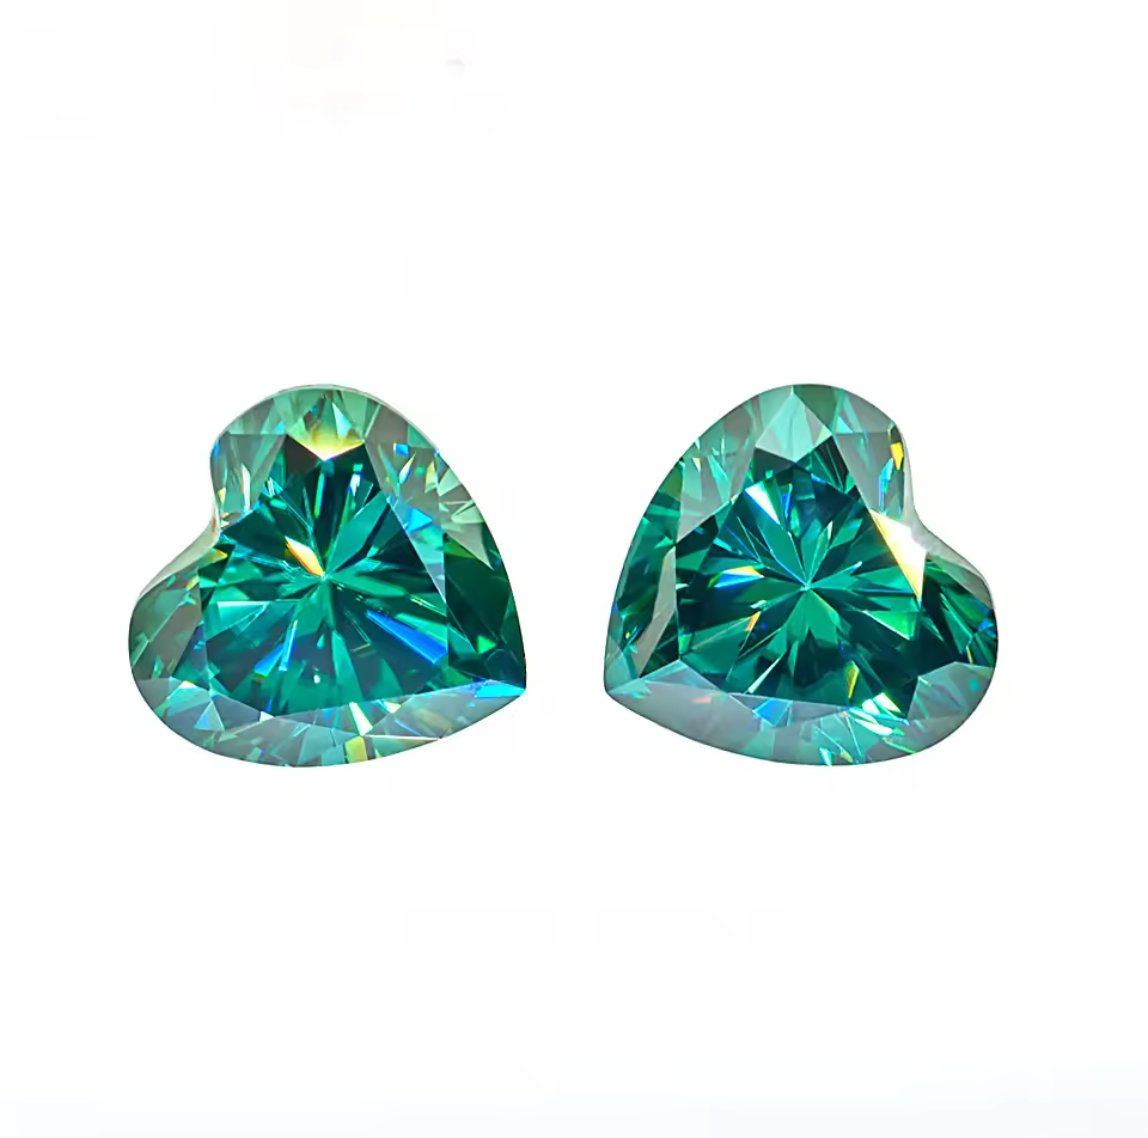 Fancy Green Heart Cut Moissanite Stones - Boutique CZ